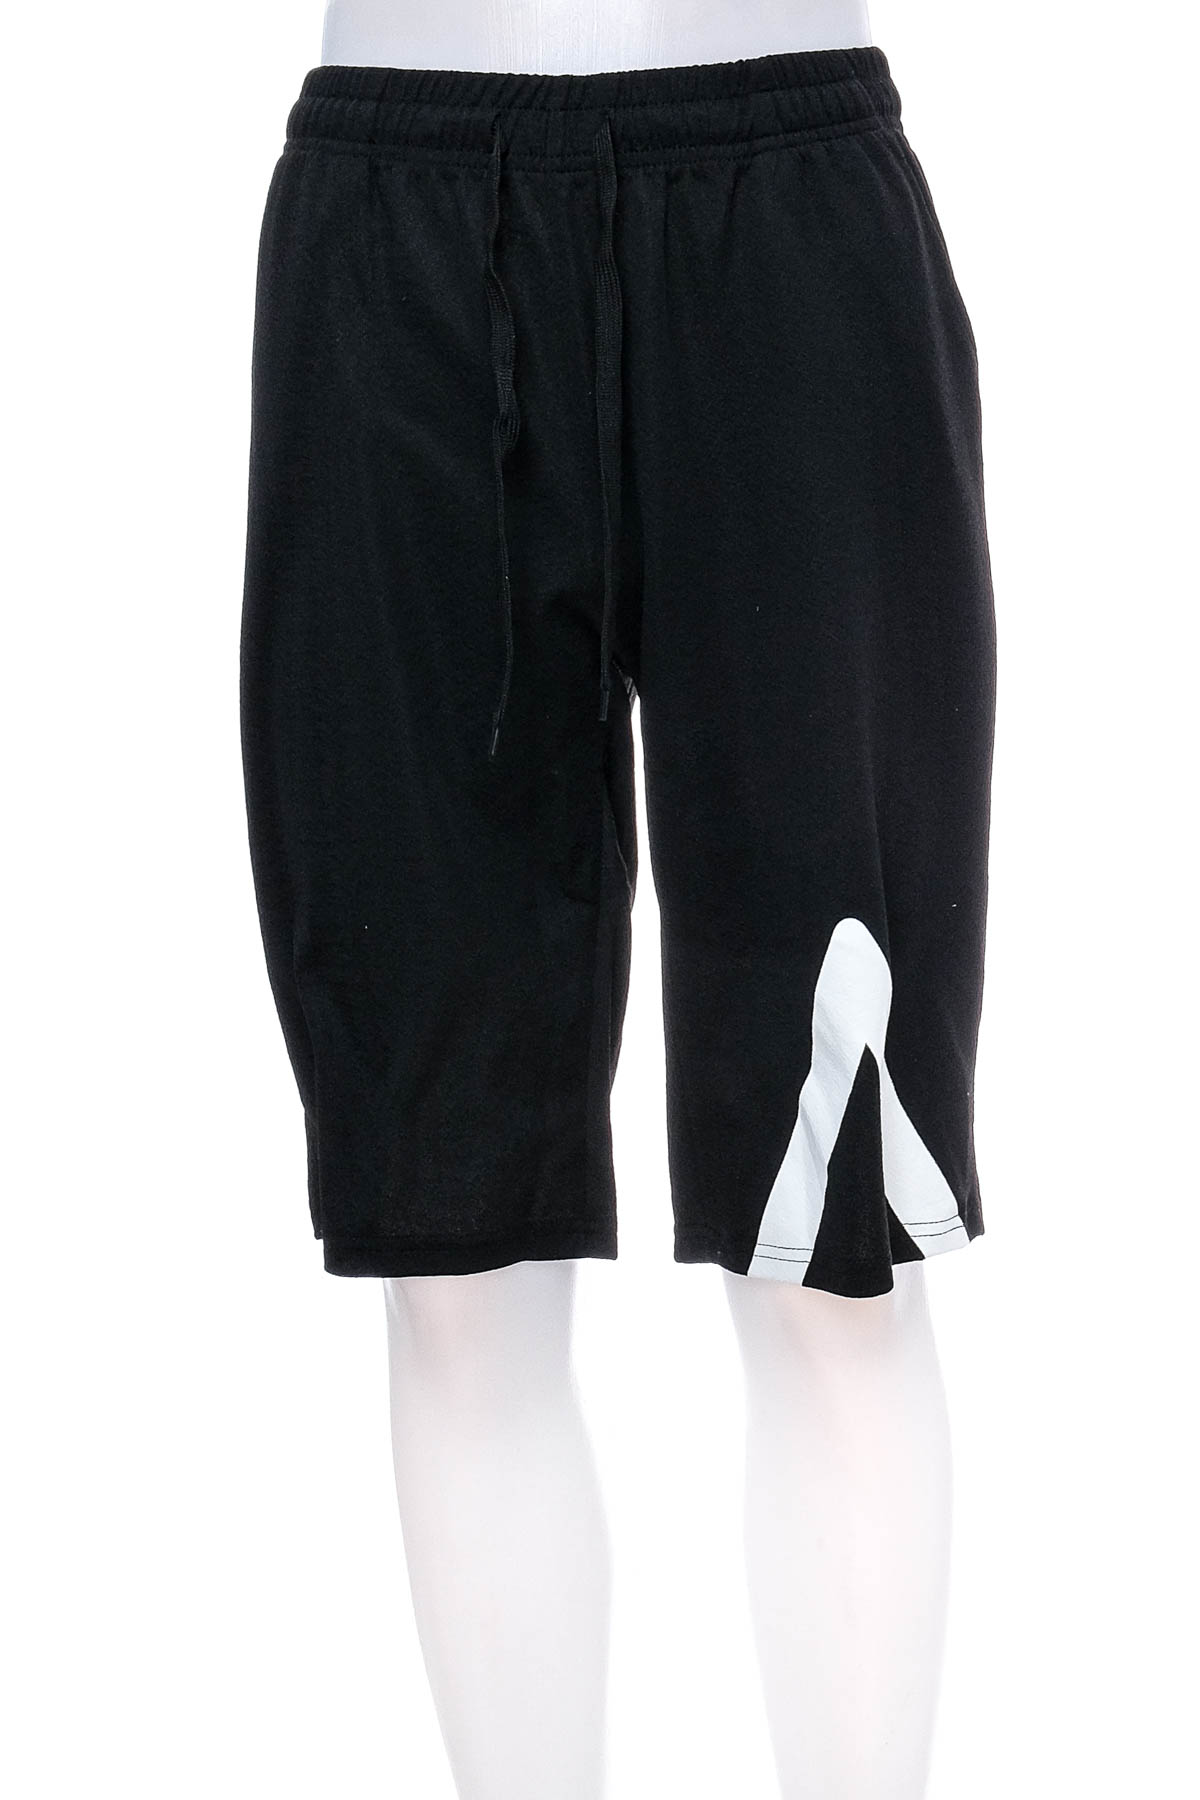 Men's shorts - SHEIN - 0